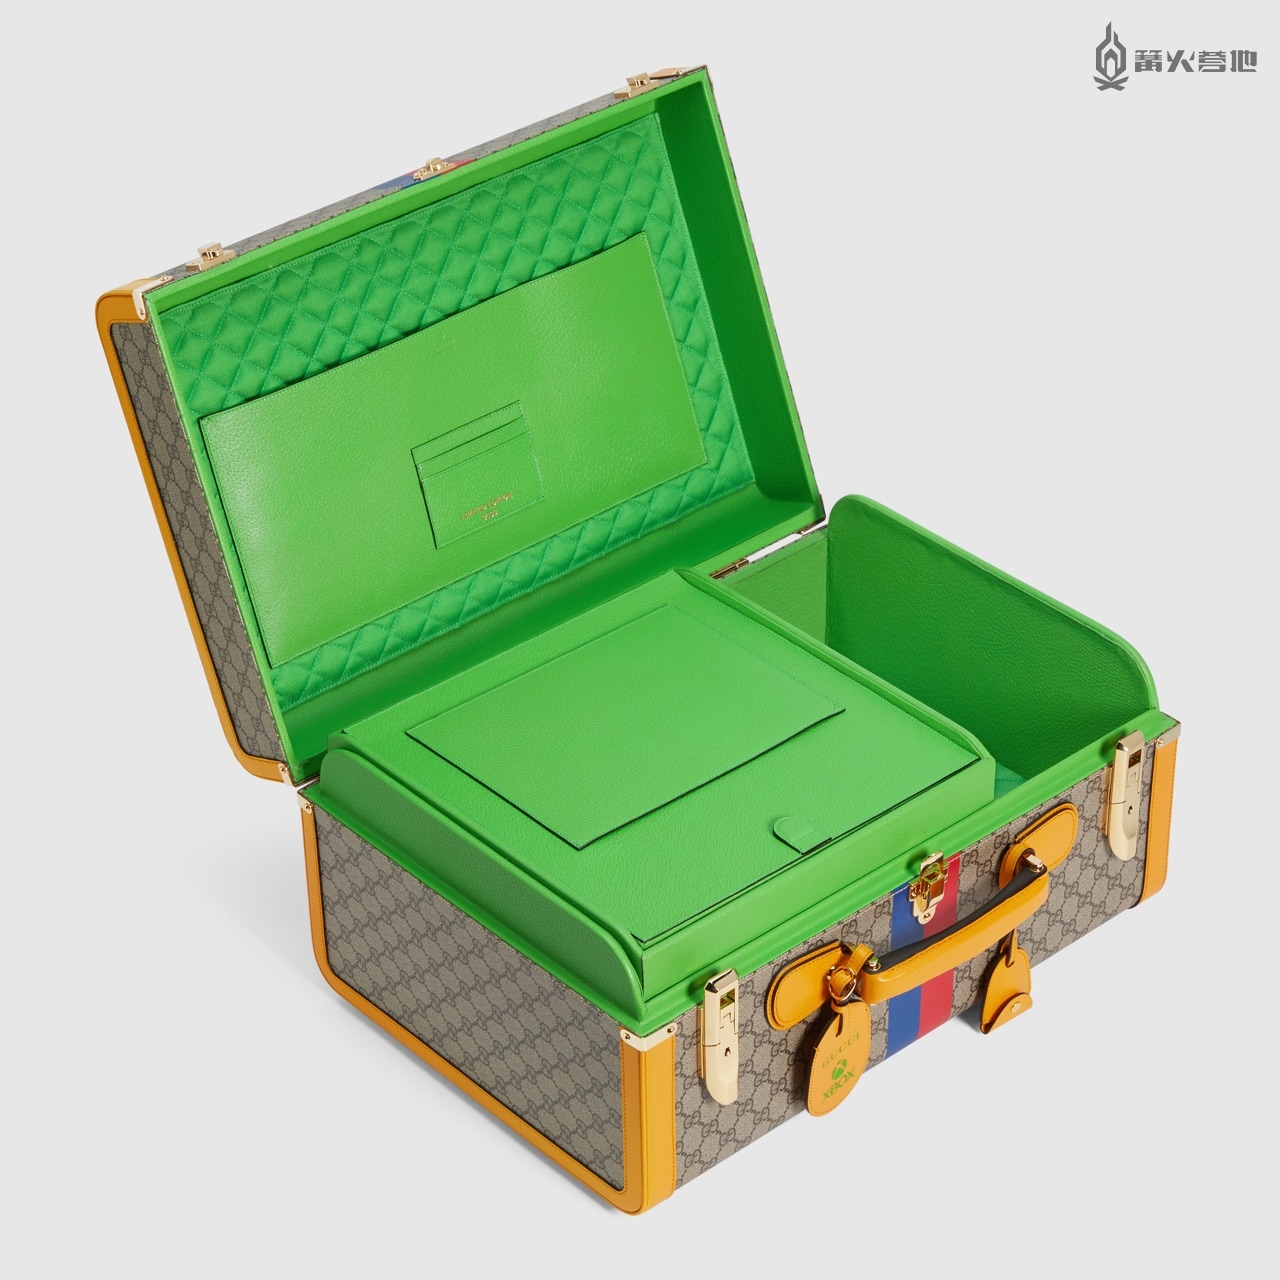 Xbox 携手 Gucci 推出限量联名旅行箱与主机套装